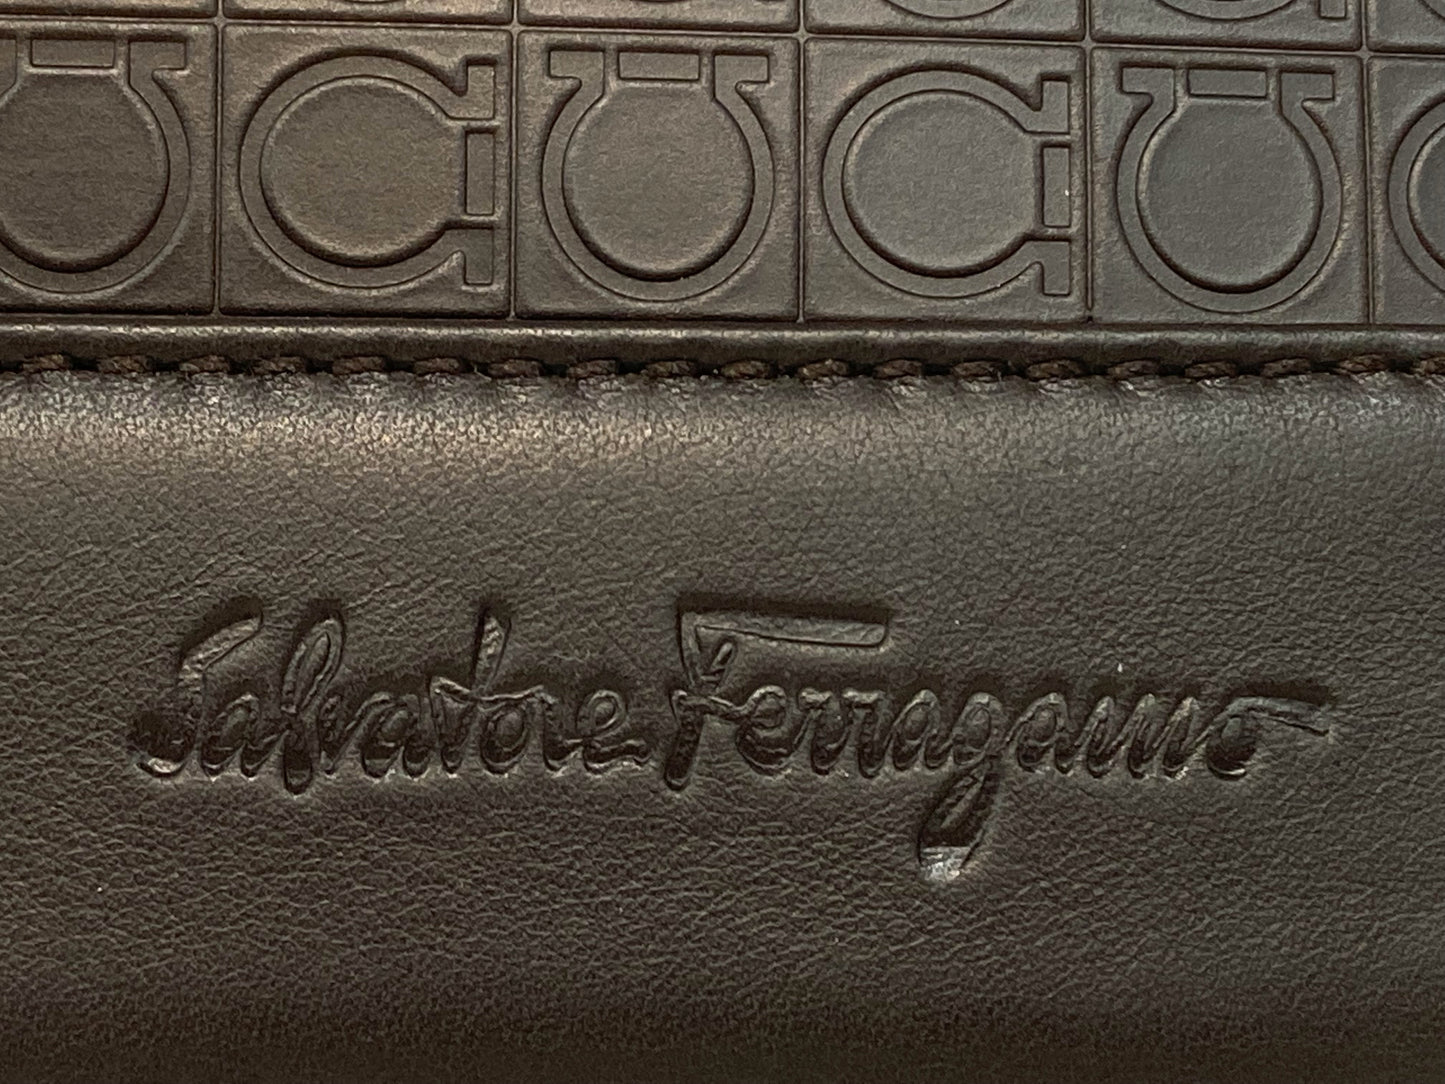 SALVATORE FERRAGAMO Leather Gancini Messenger Bag Brown